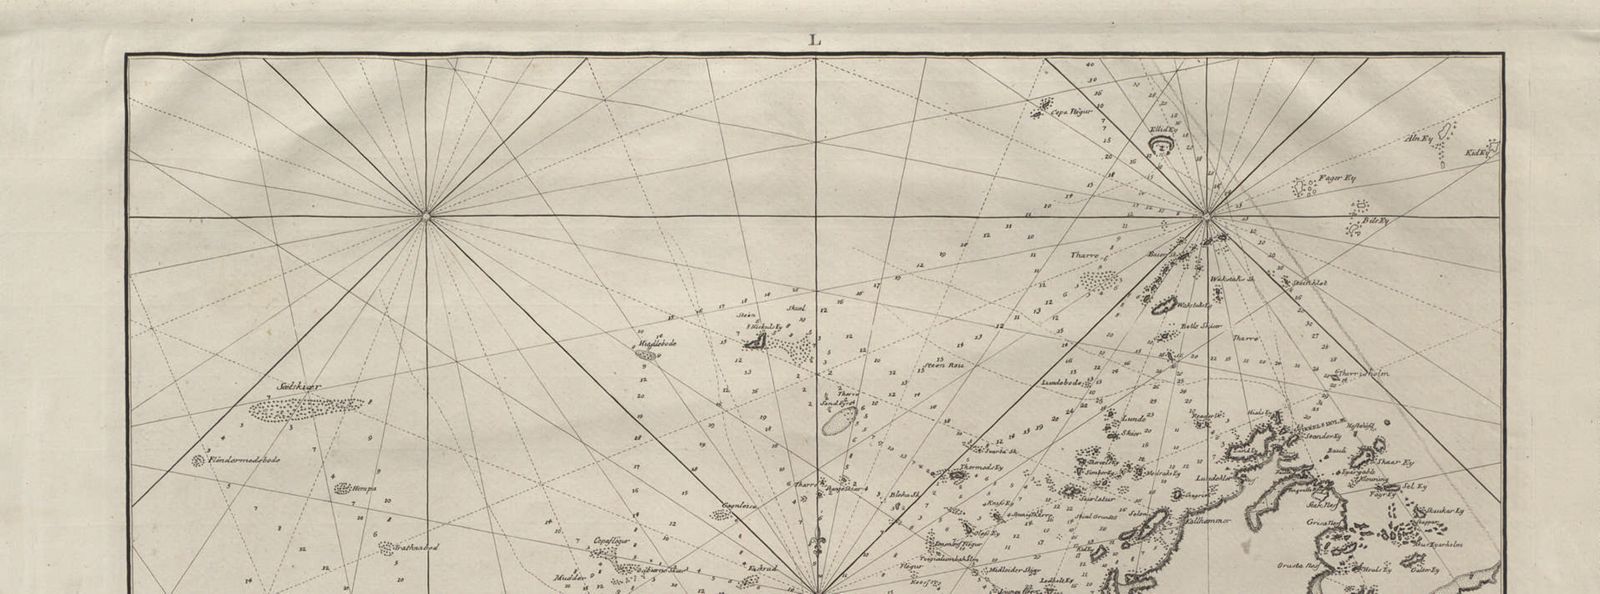 The coastal survey of 1776-1777